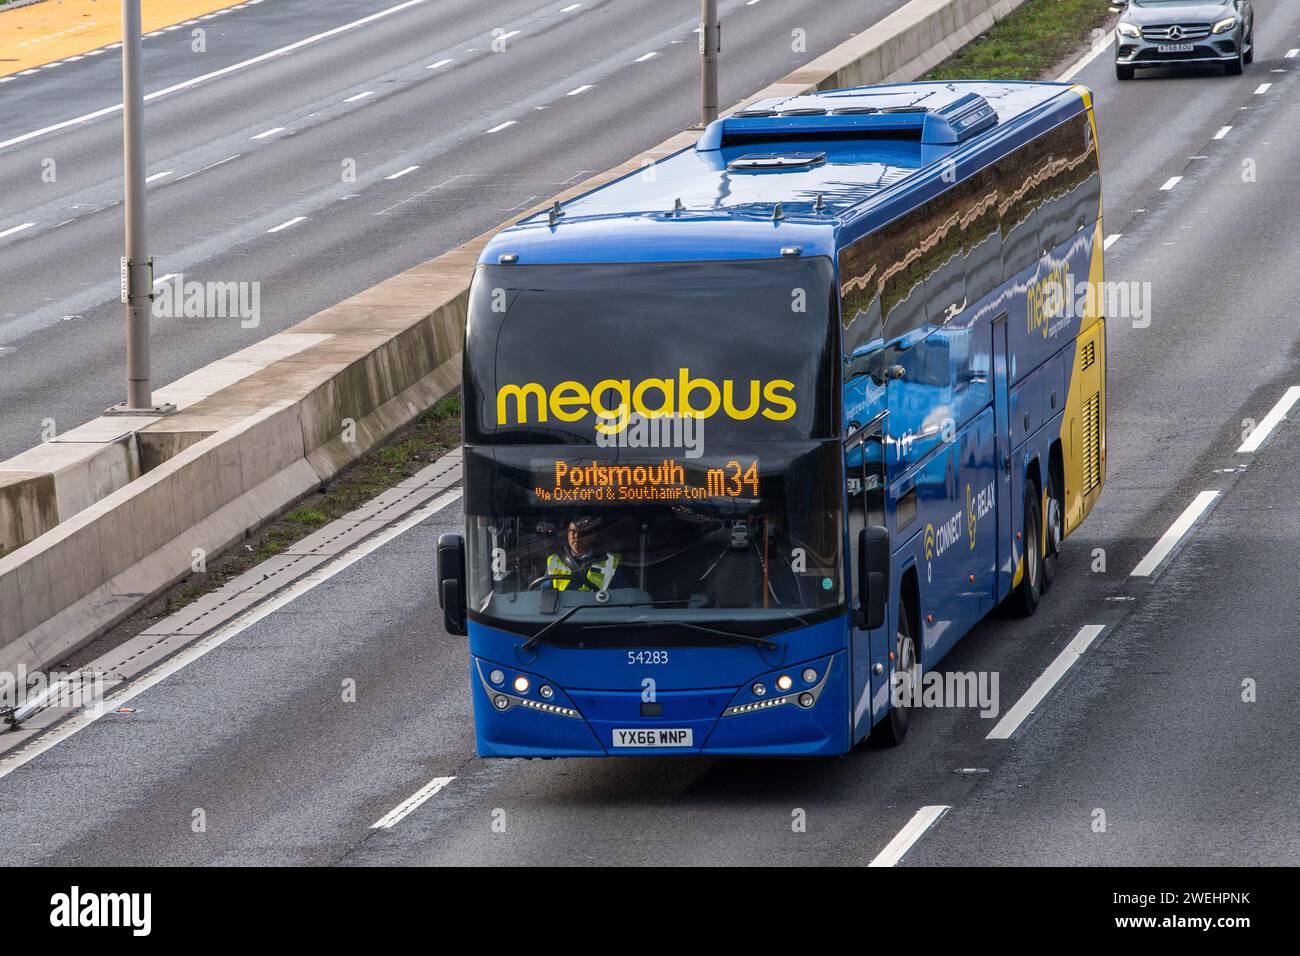 Megabus coach on the M6 motorway near Birmingham, heading for Portsmouth, UK. Stock Photo